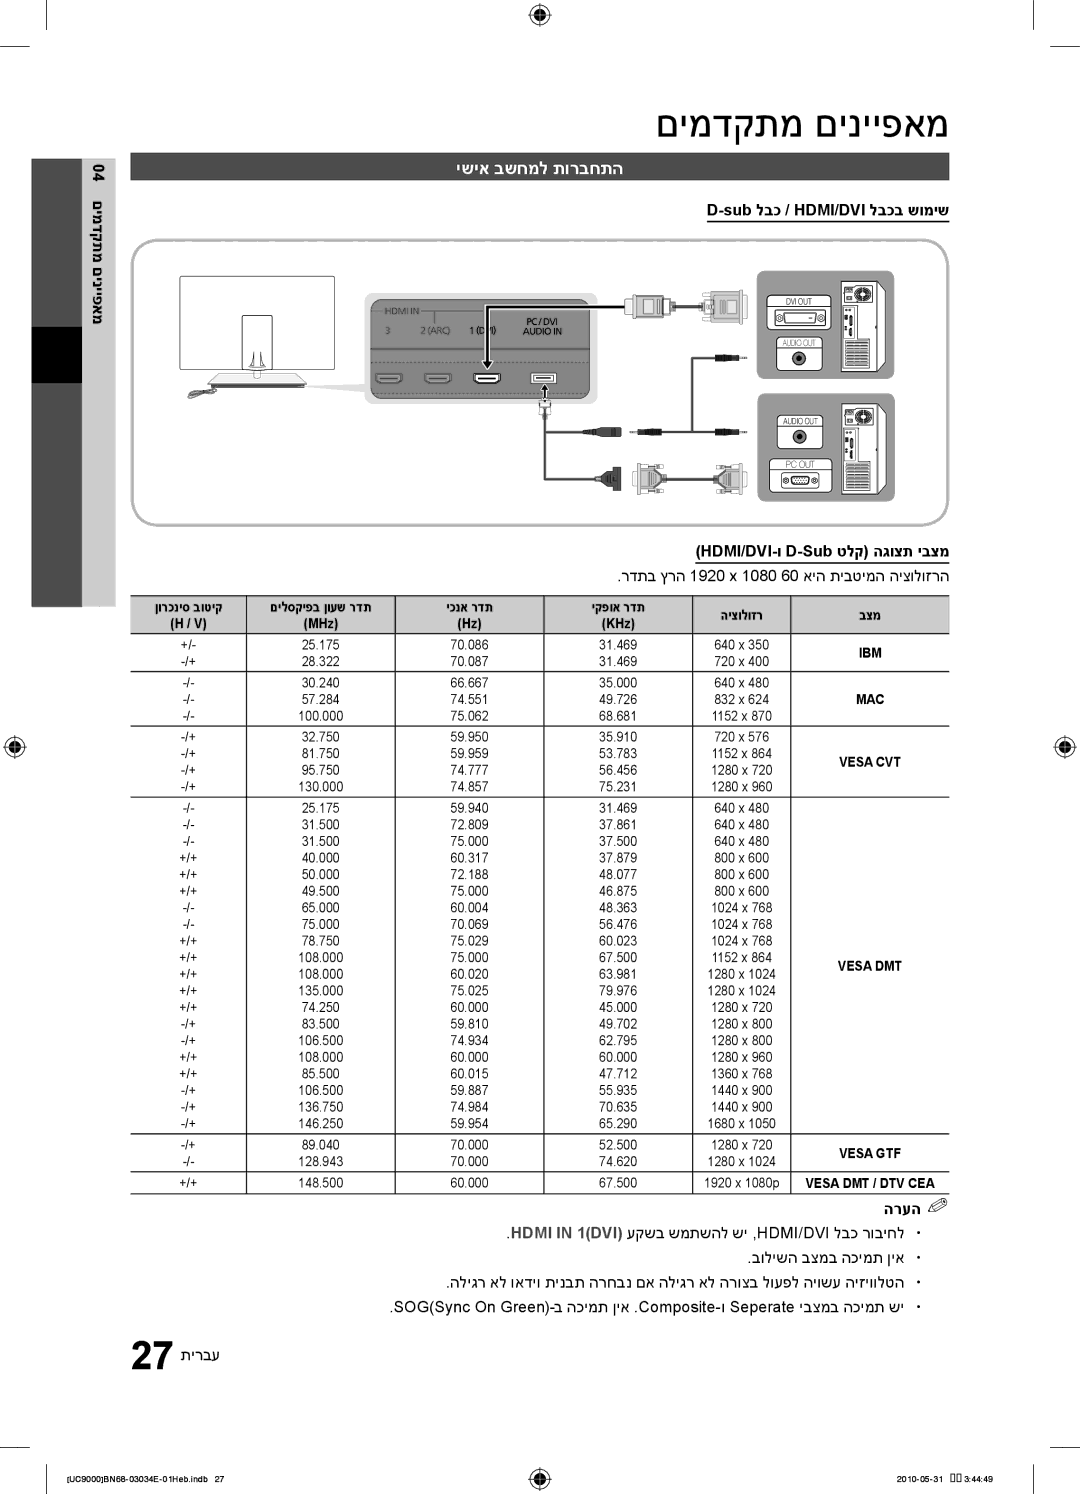 Samsung UA55C9000SRXSQ manual ישיא בשחמל תורבחתה, 04 םימדקתמ םינייפאמ, Sub לבכ / HDMI/DVI לבכב שומיש 